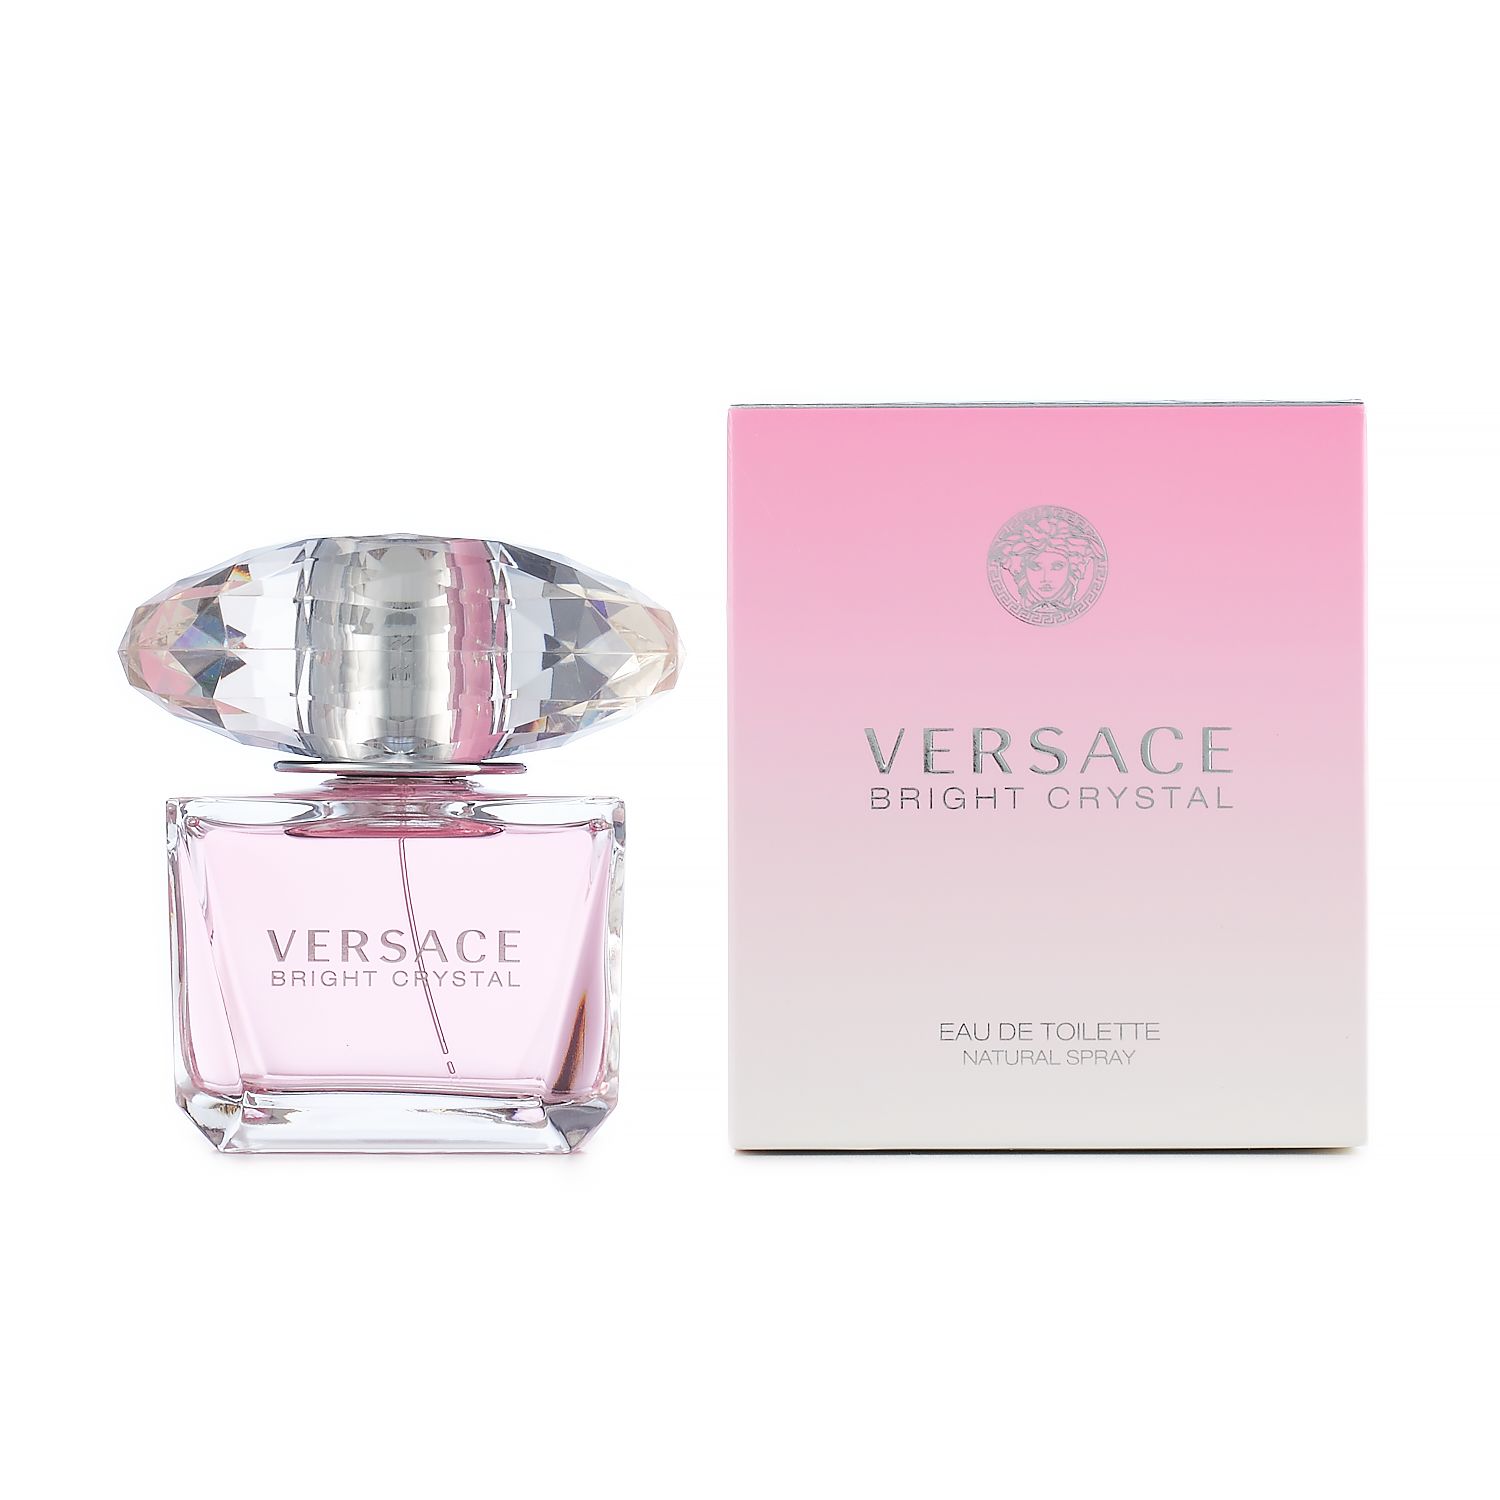 versace floral perfume